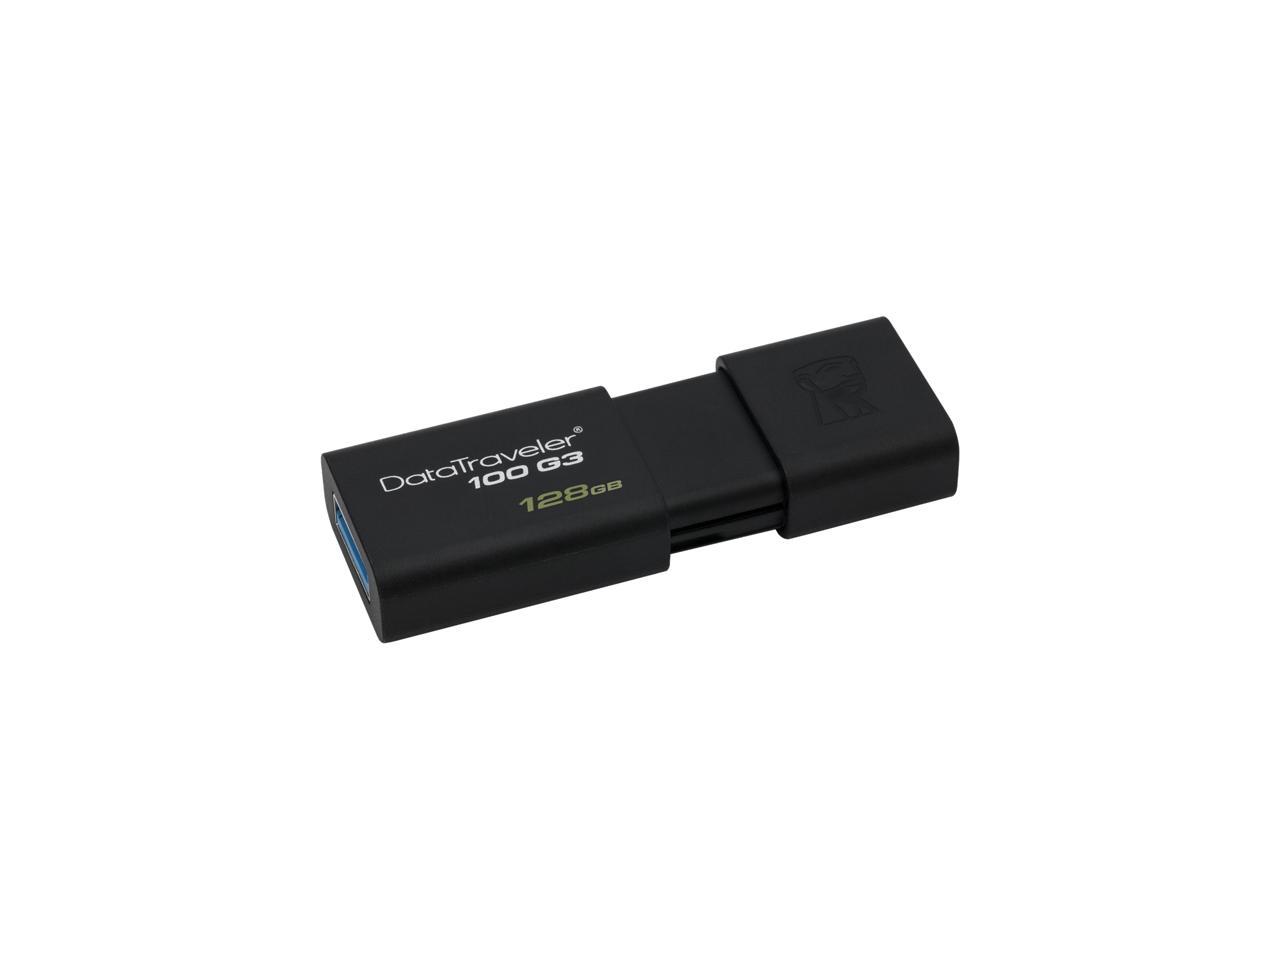 Kingston 128GB DataTraveler 100 G3 USB 3.0 Flash Drive (DT100G3/128GB)